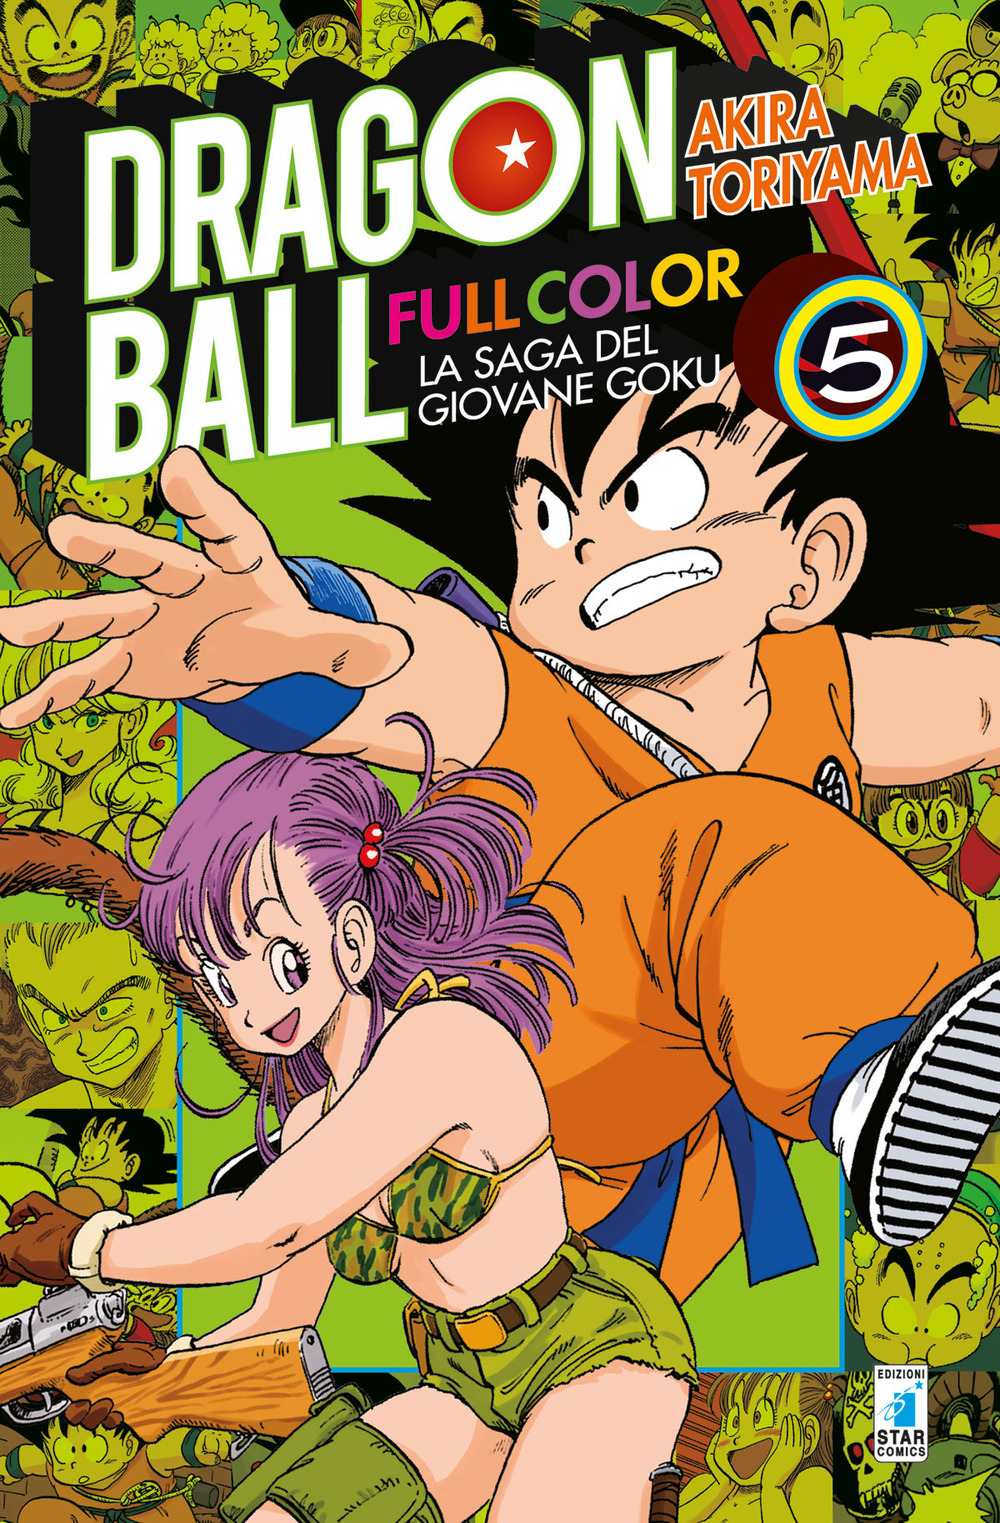 DRAGON BALL FULL COLOR - LA SAGA DEL GIOVANE GOKU N. 5